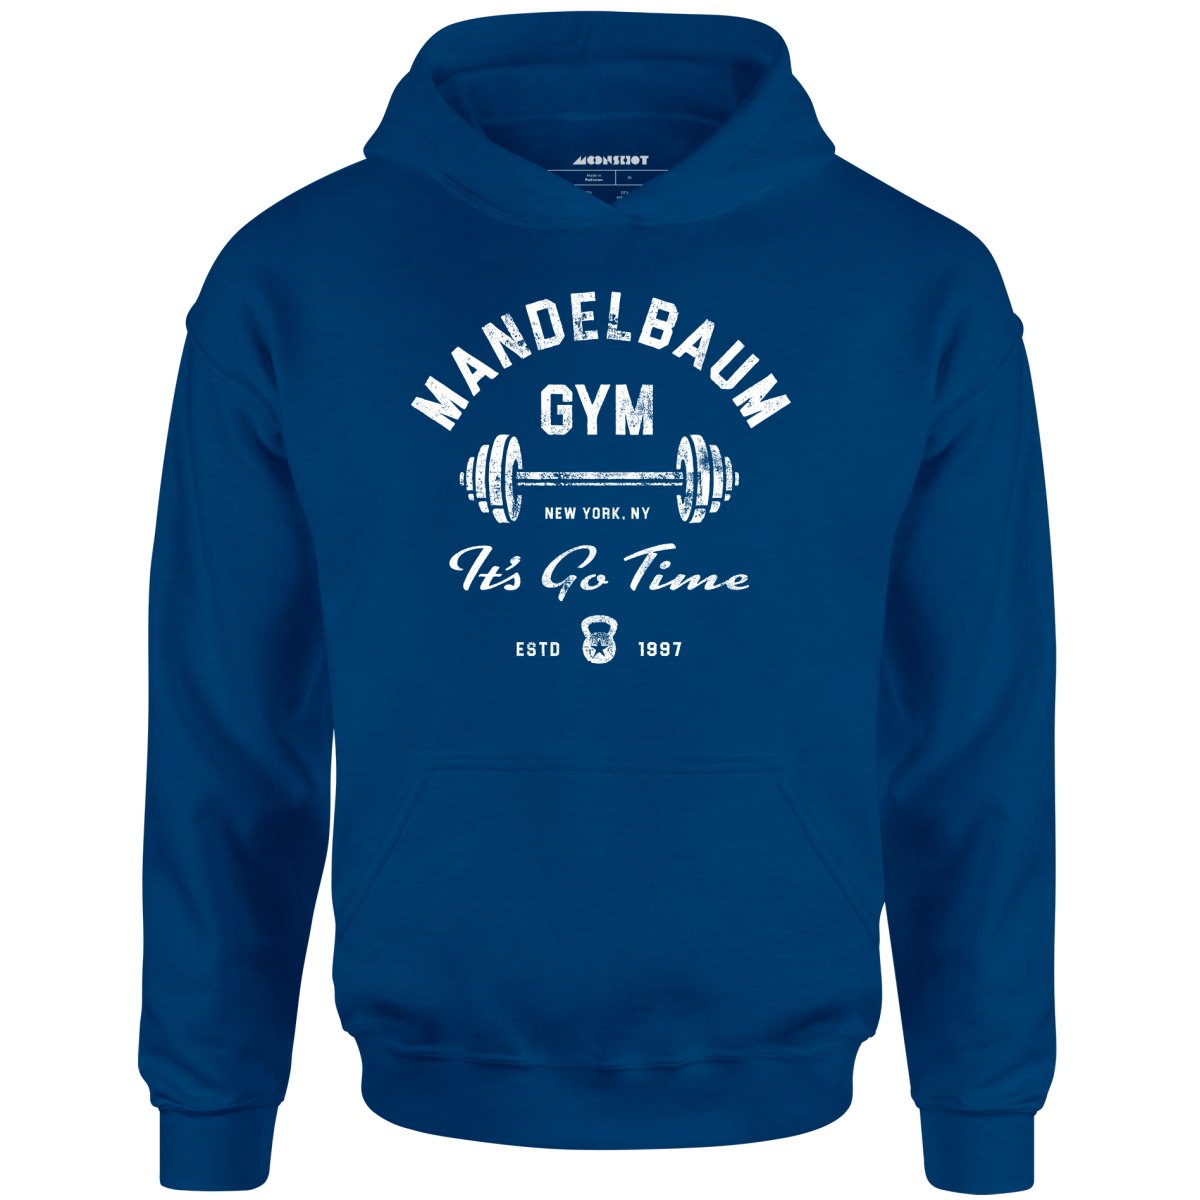 Mandelbaum Gym - Unisex Hoodie